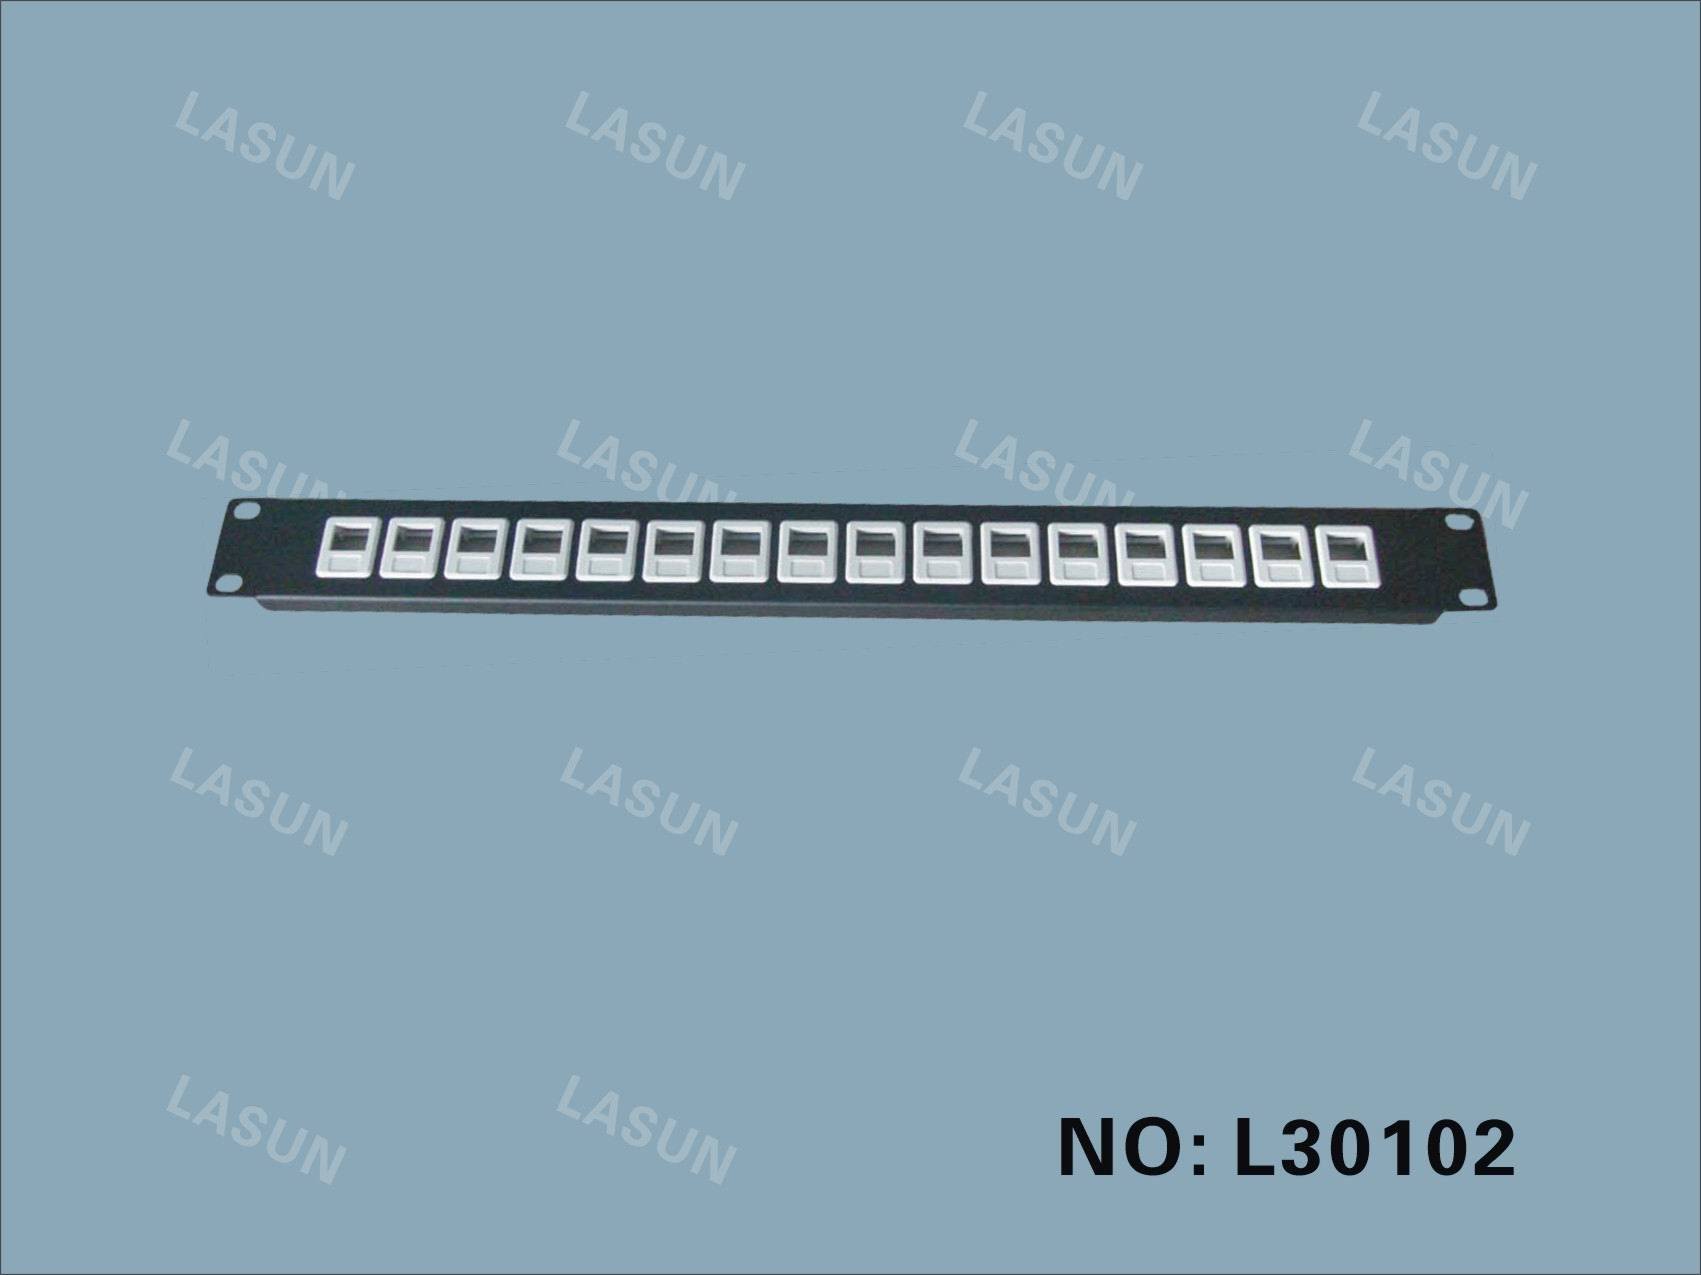 16 Port UTP Patch Panel (L30102)